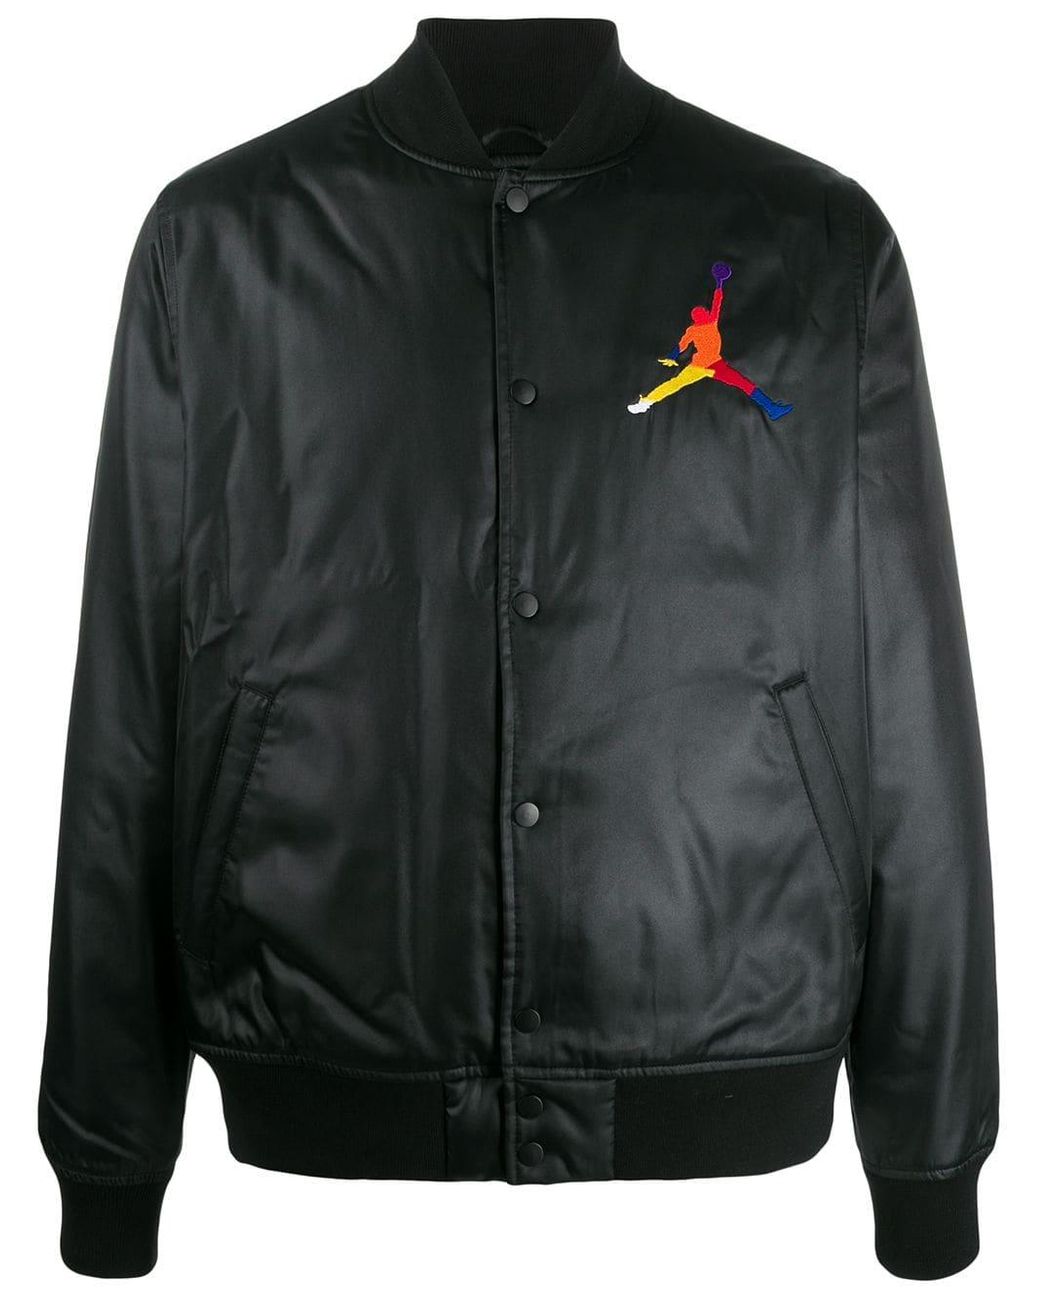 Nike Jordan Bomber Jacket in Black for 